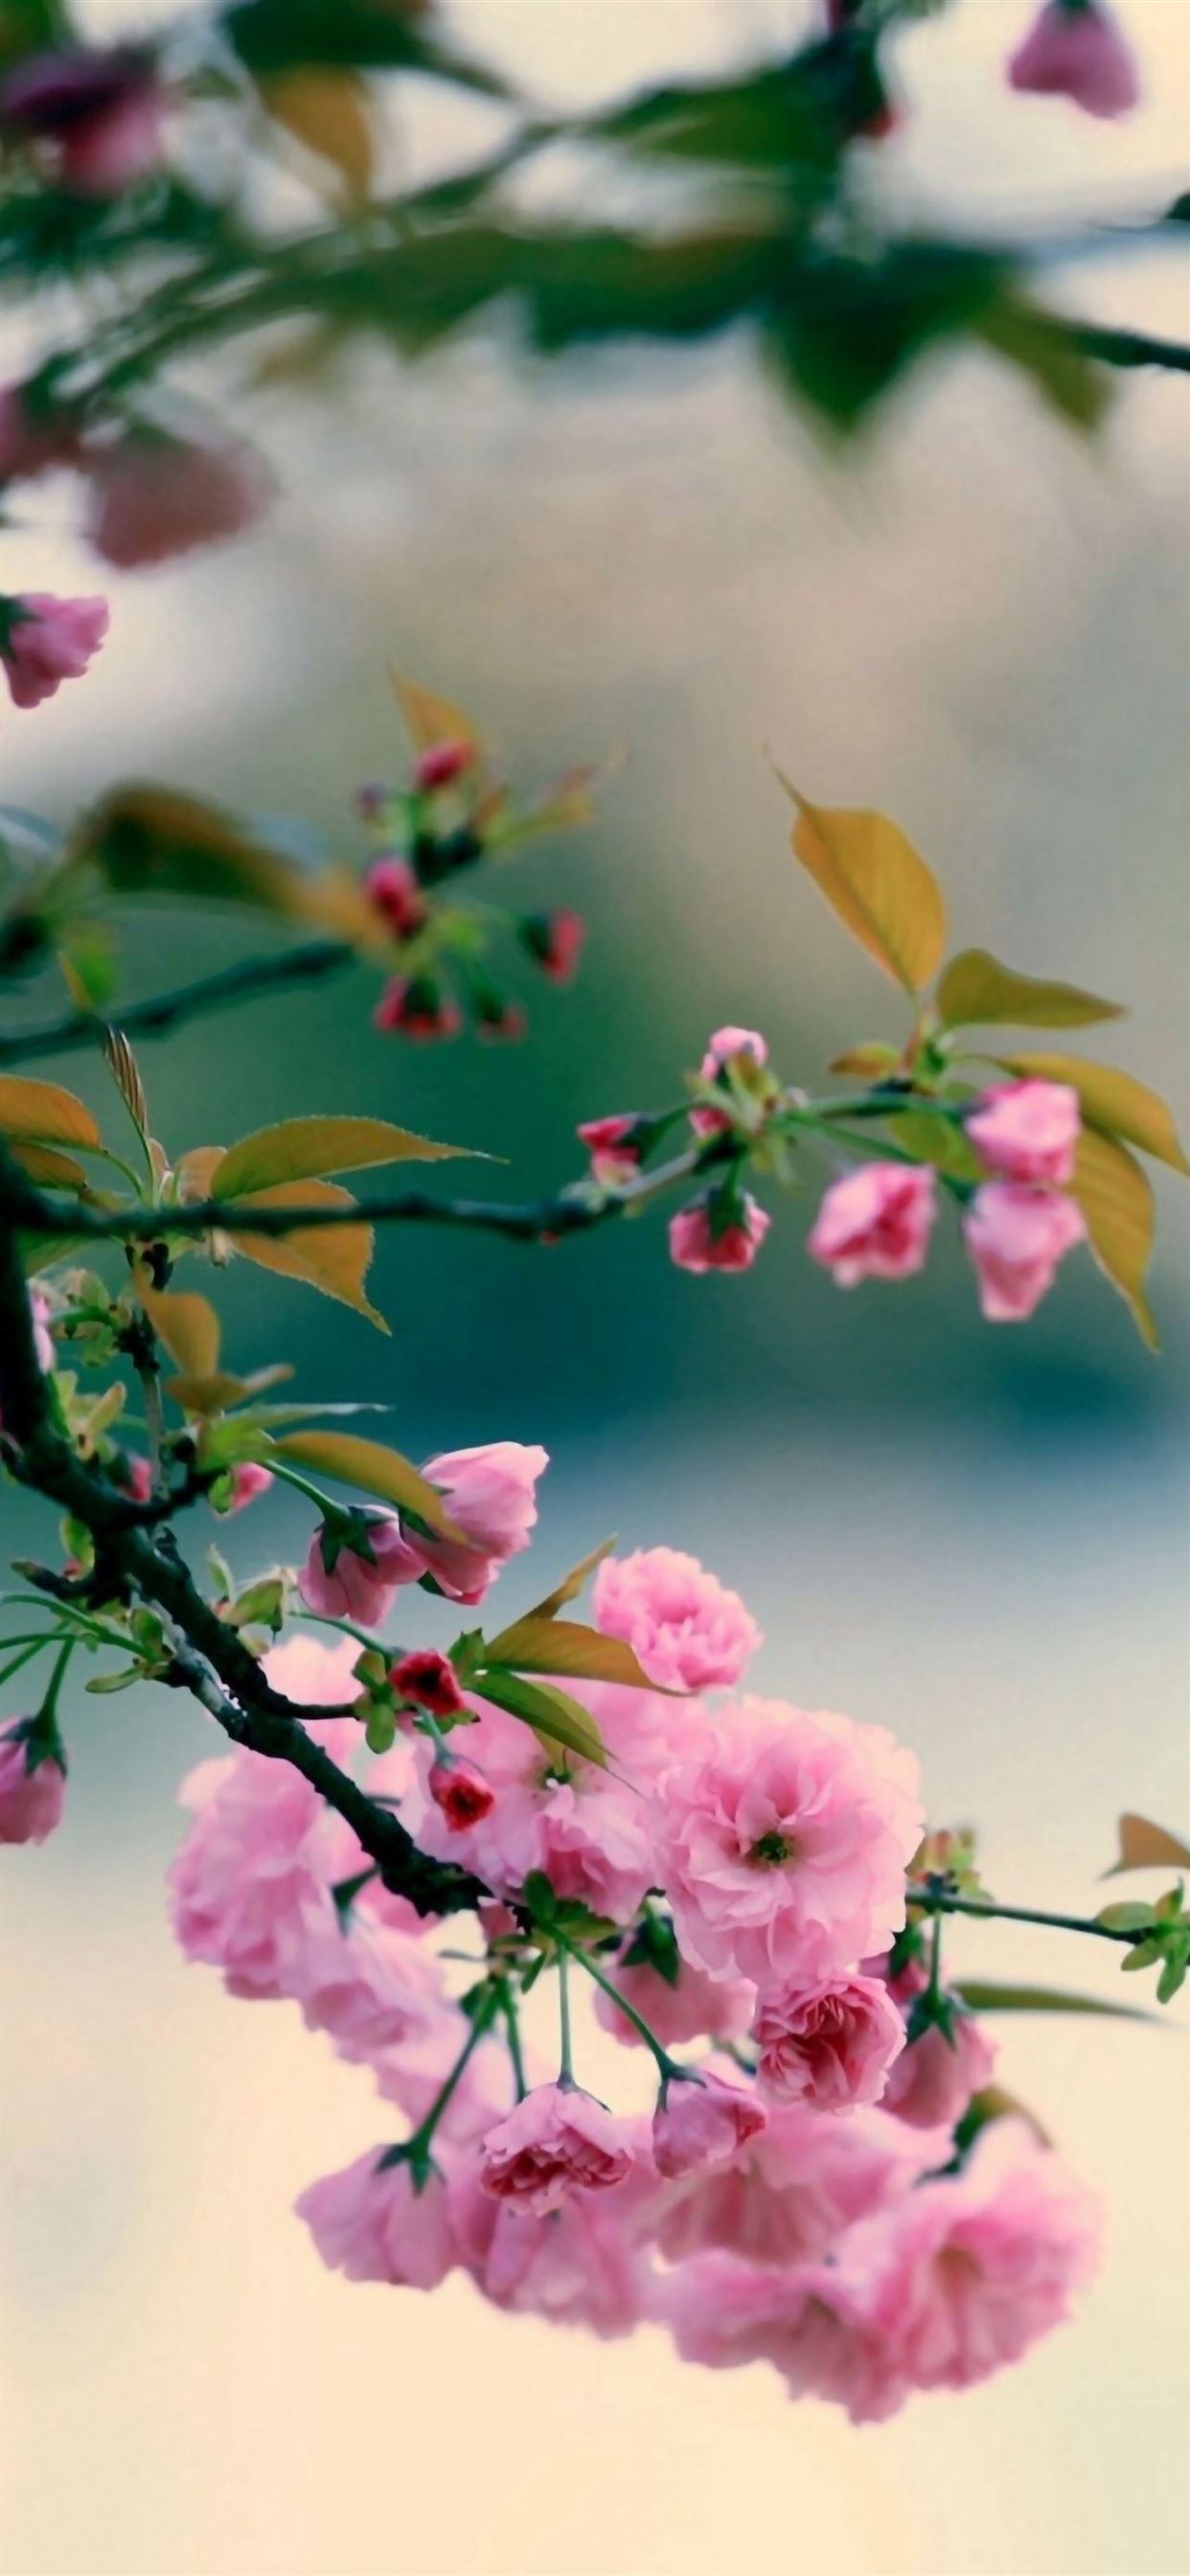 Nature Spring Plum Branch Bokeh Blur iPhone Wallpaper Free Download